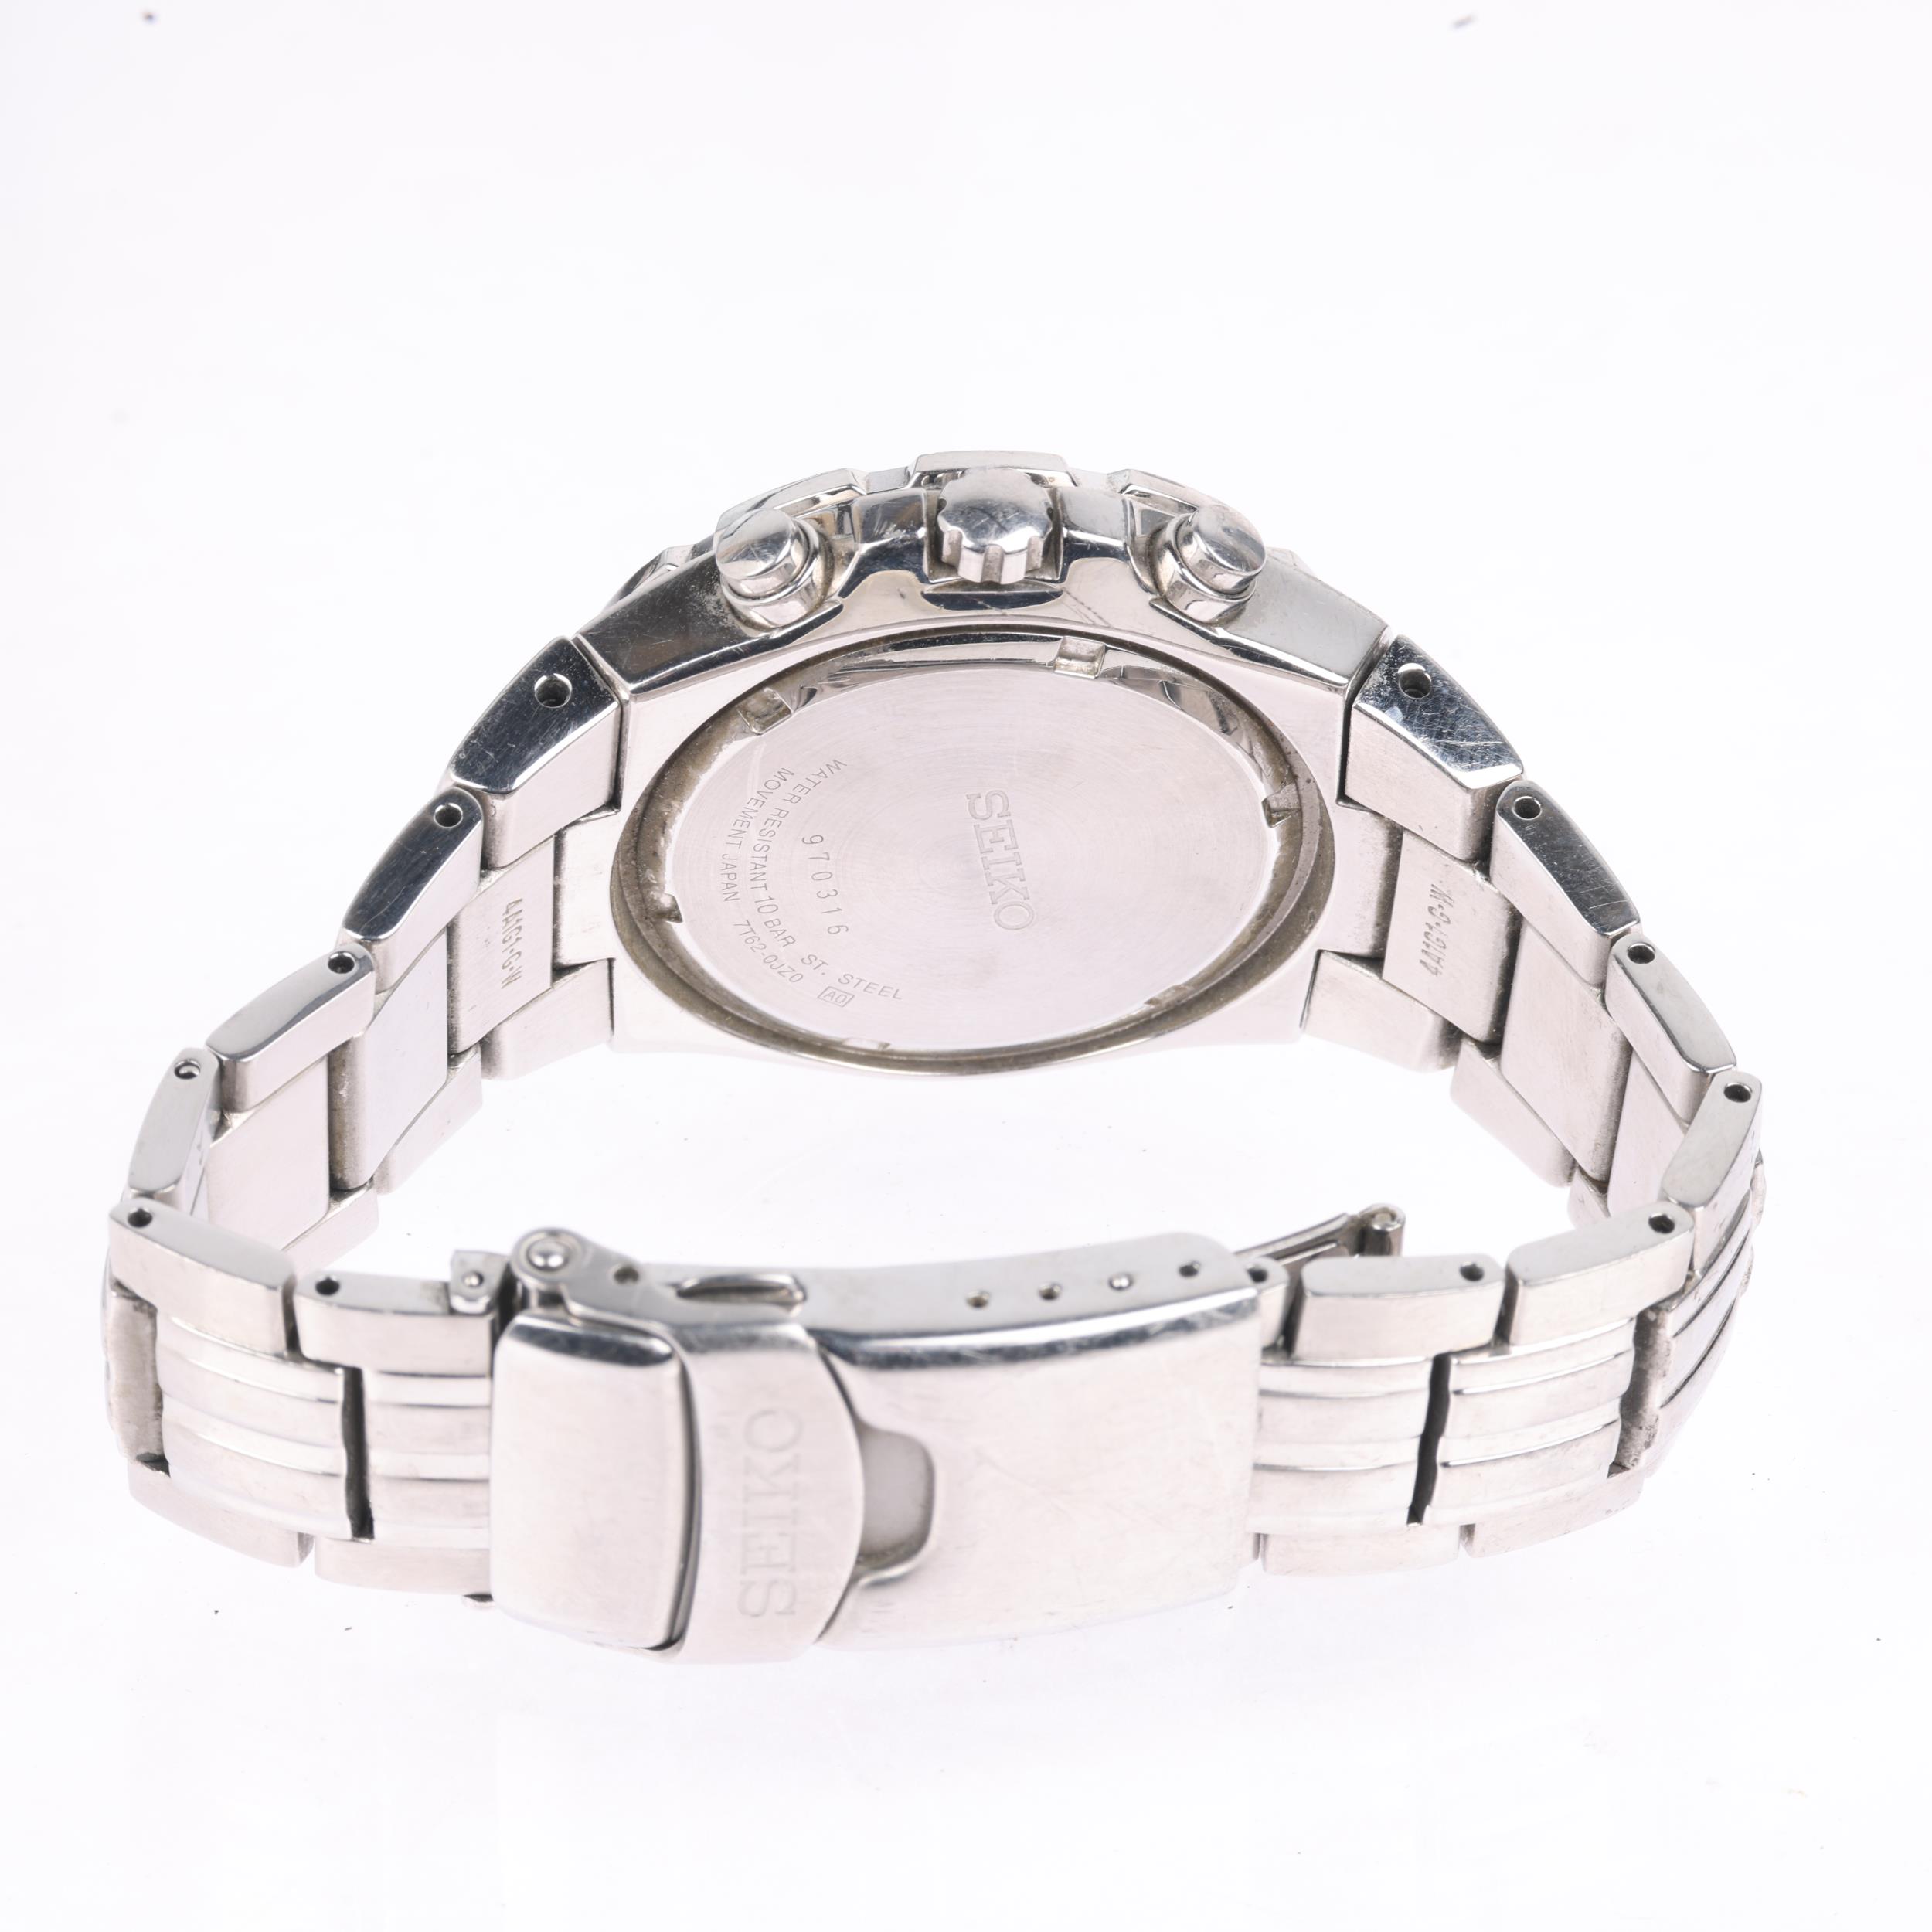 SEIKO - a stainless steel quartz chronograph calendar bracelet watch, ref. 7T62-0JZ0, blue dial with - Image 3 of 5